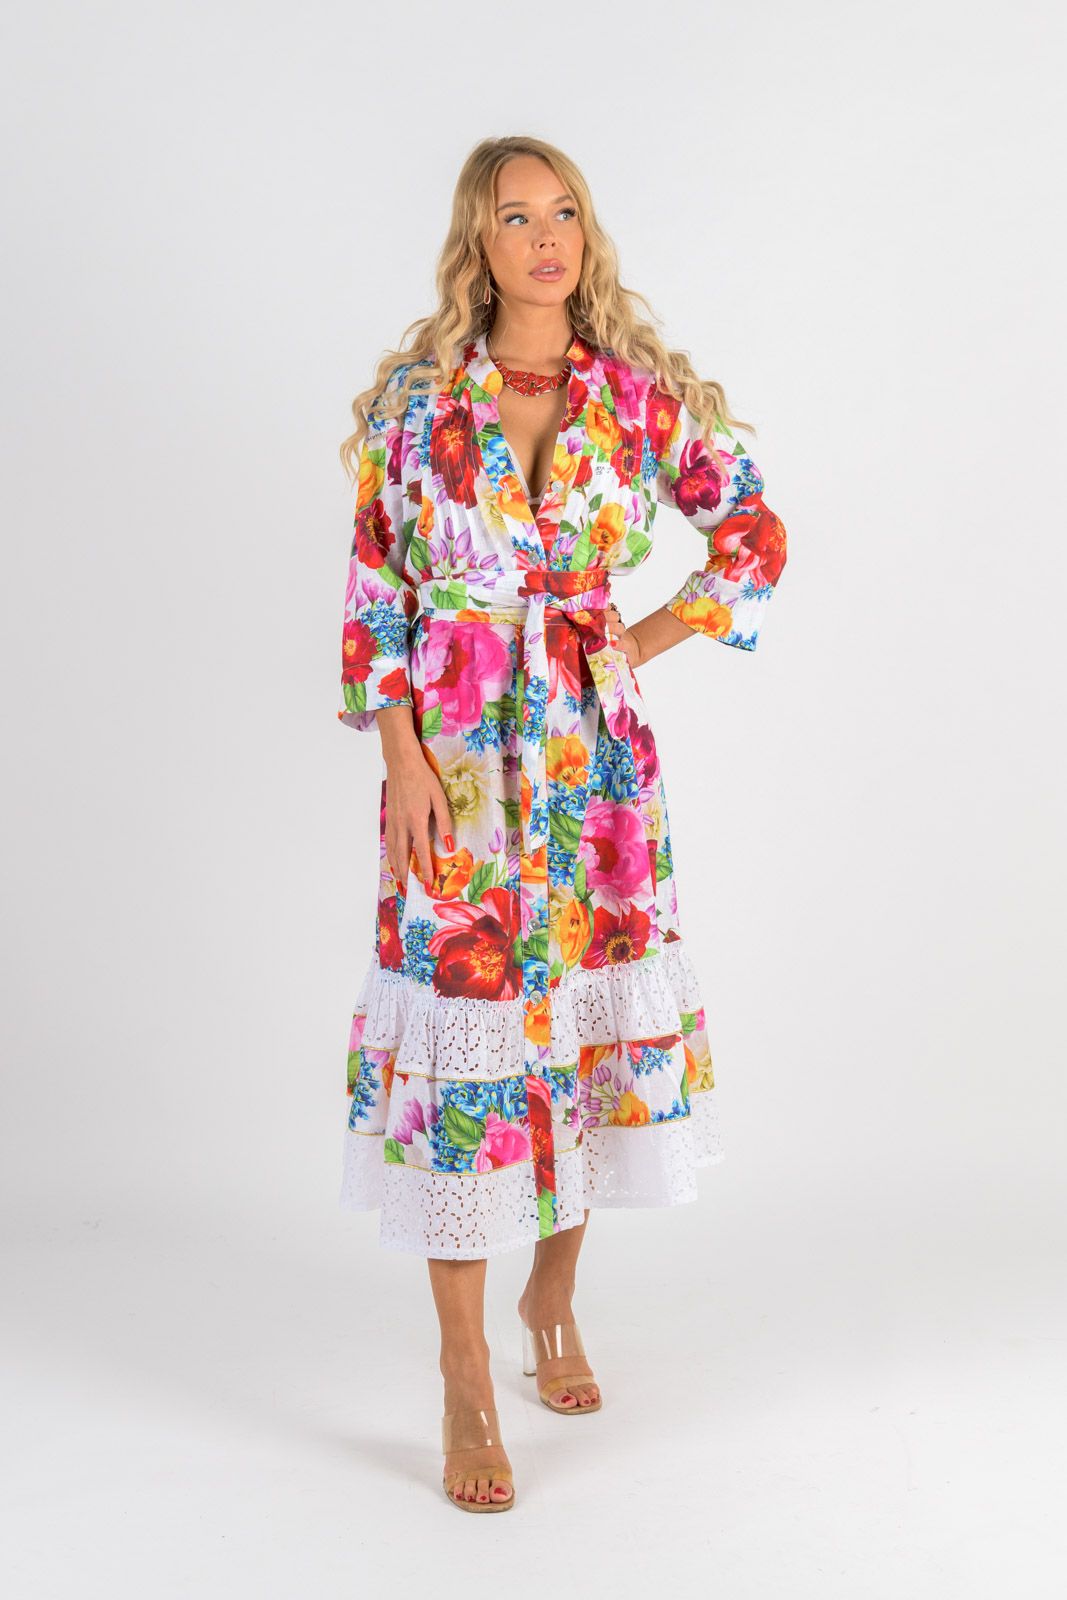 Positano Belen Dress - Premium Dresses from Marina St. Barth - Just $530.00! Shop now at Marina St Barth